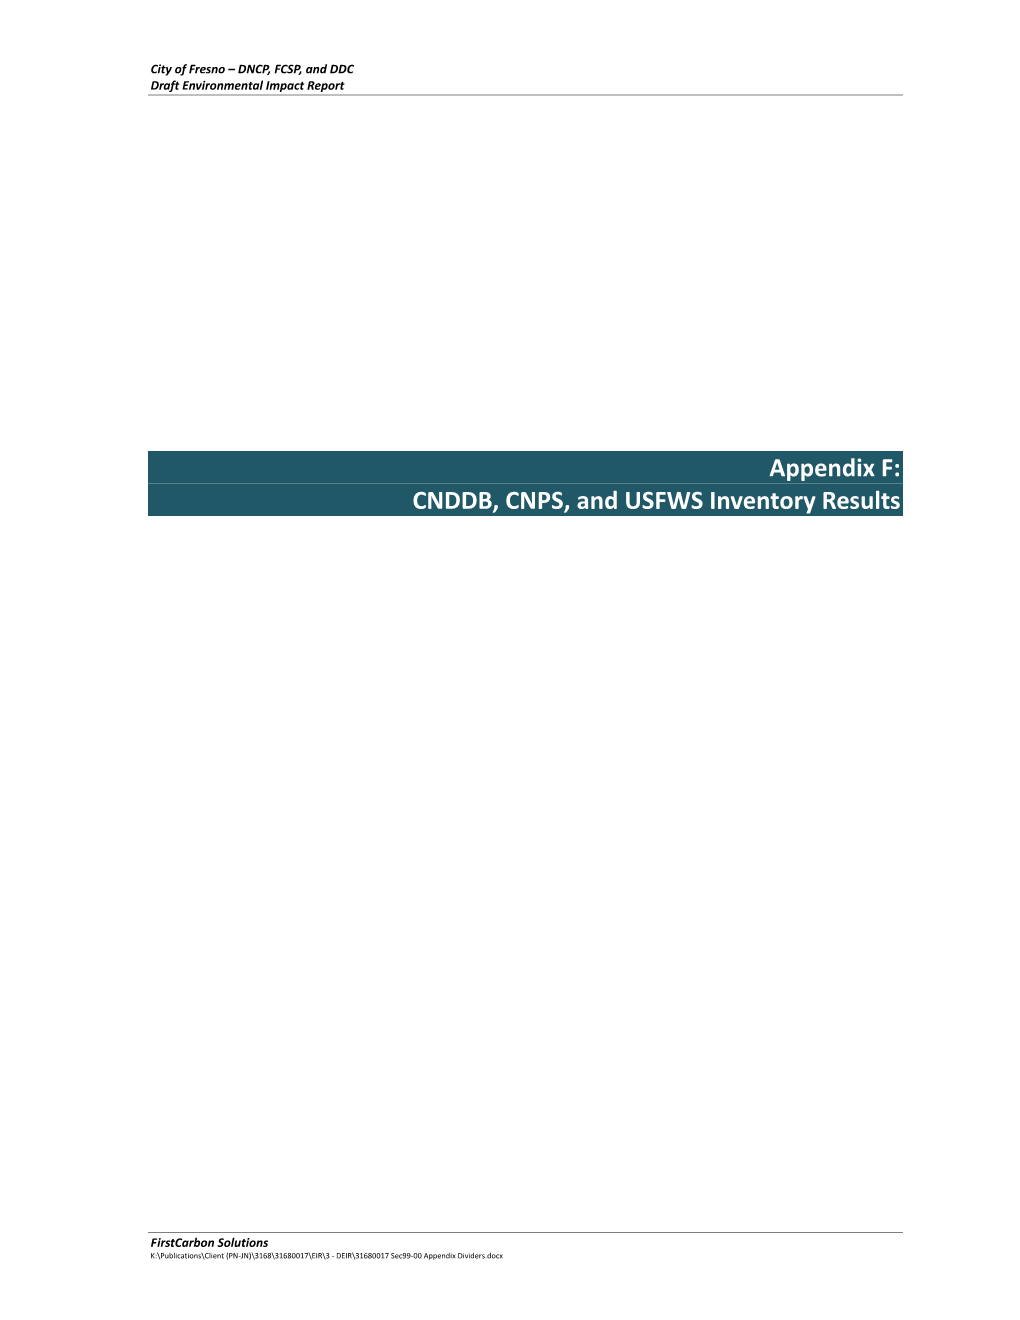 Appendix F: CNDDB, CNPS, and USFWS Inventory Results